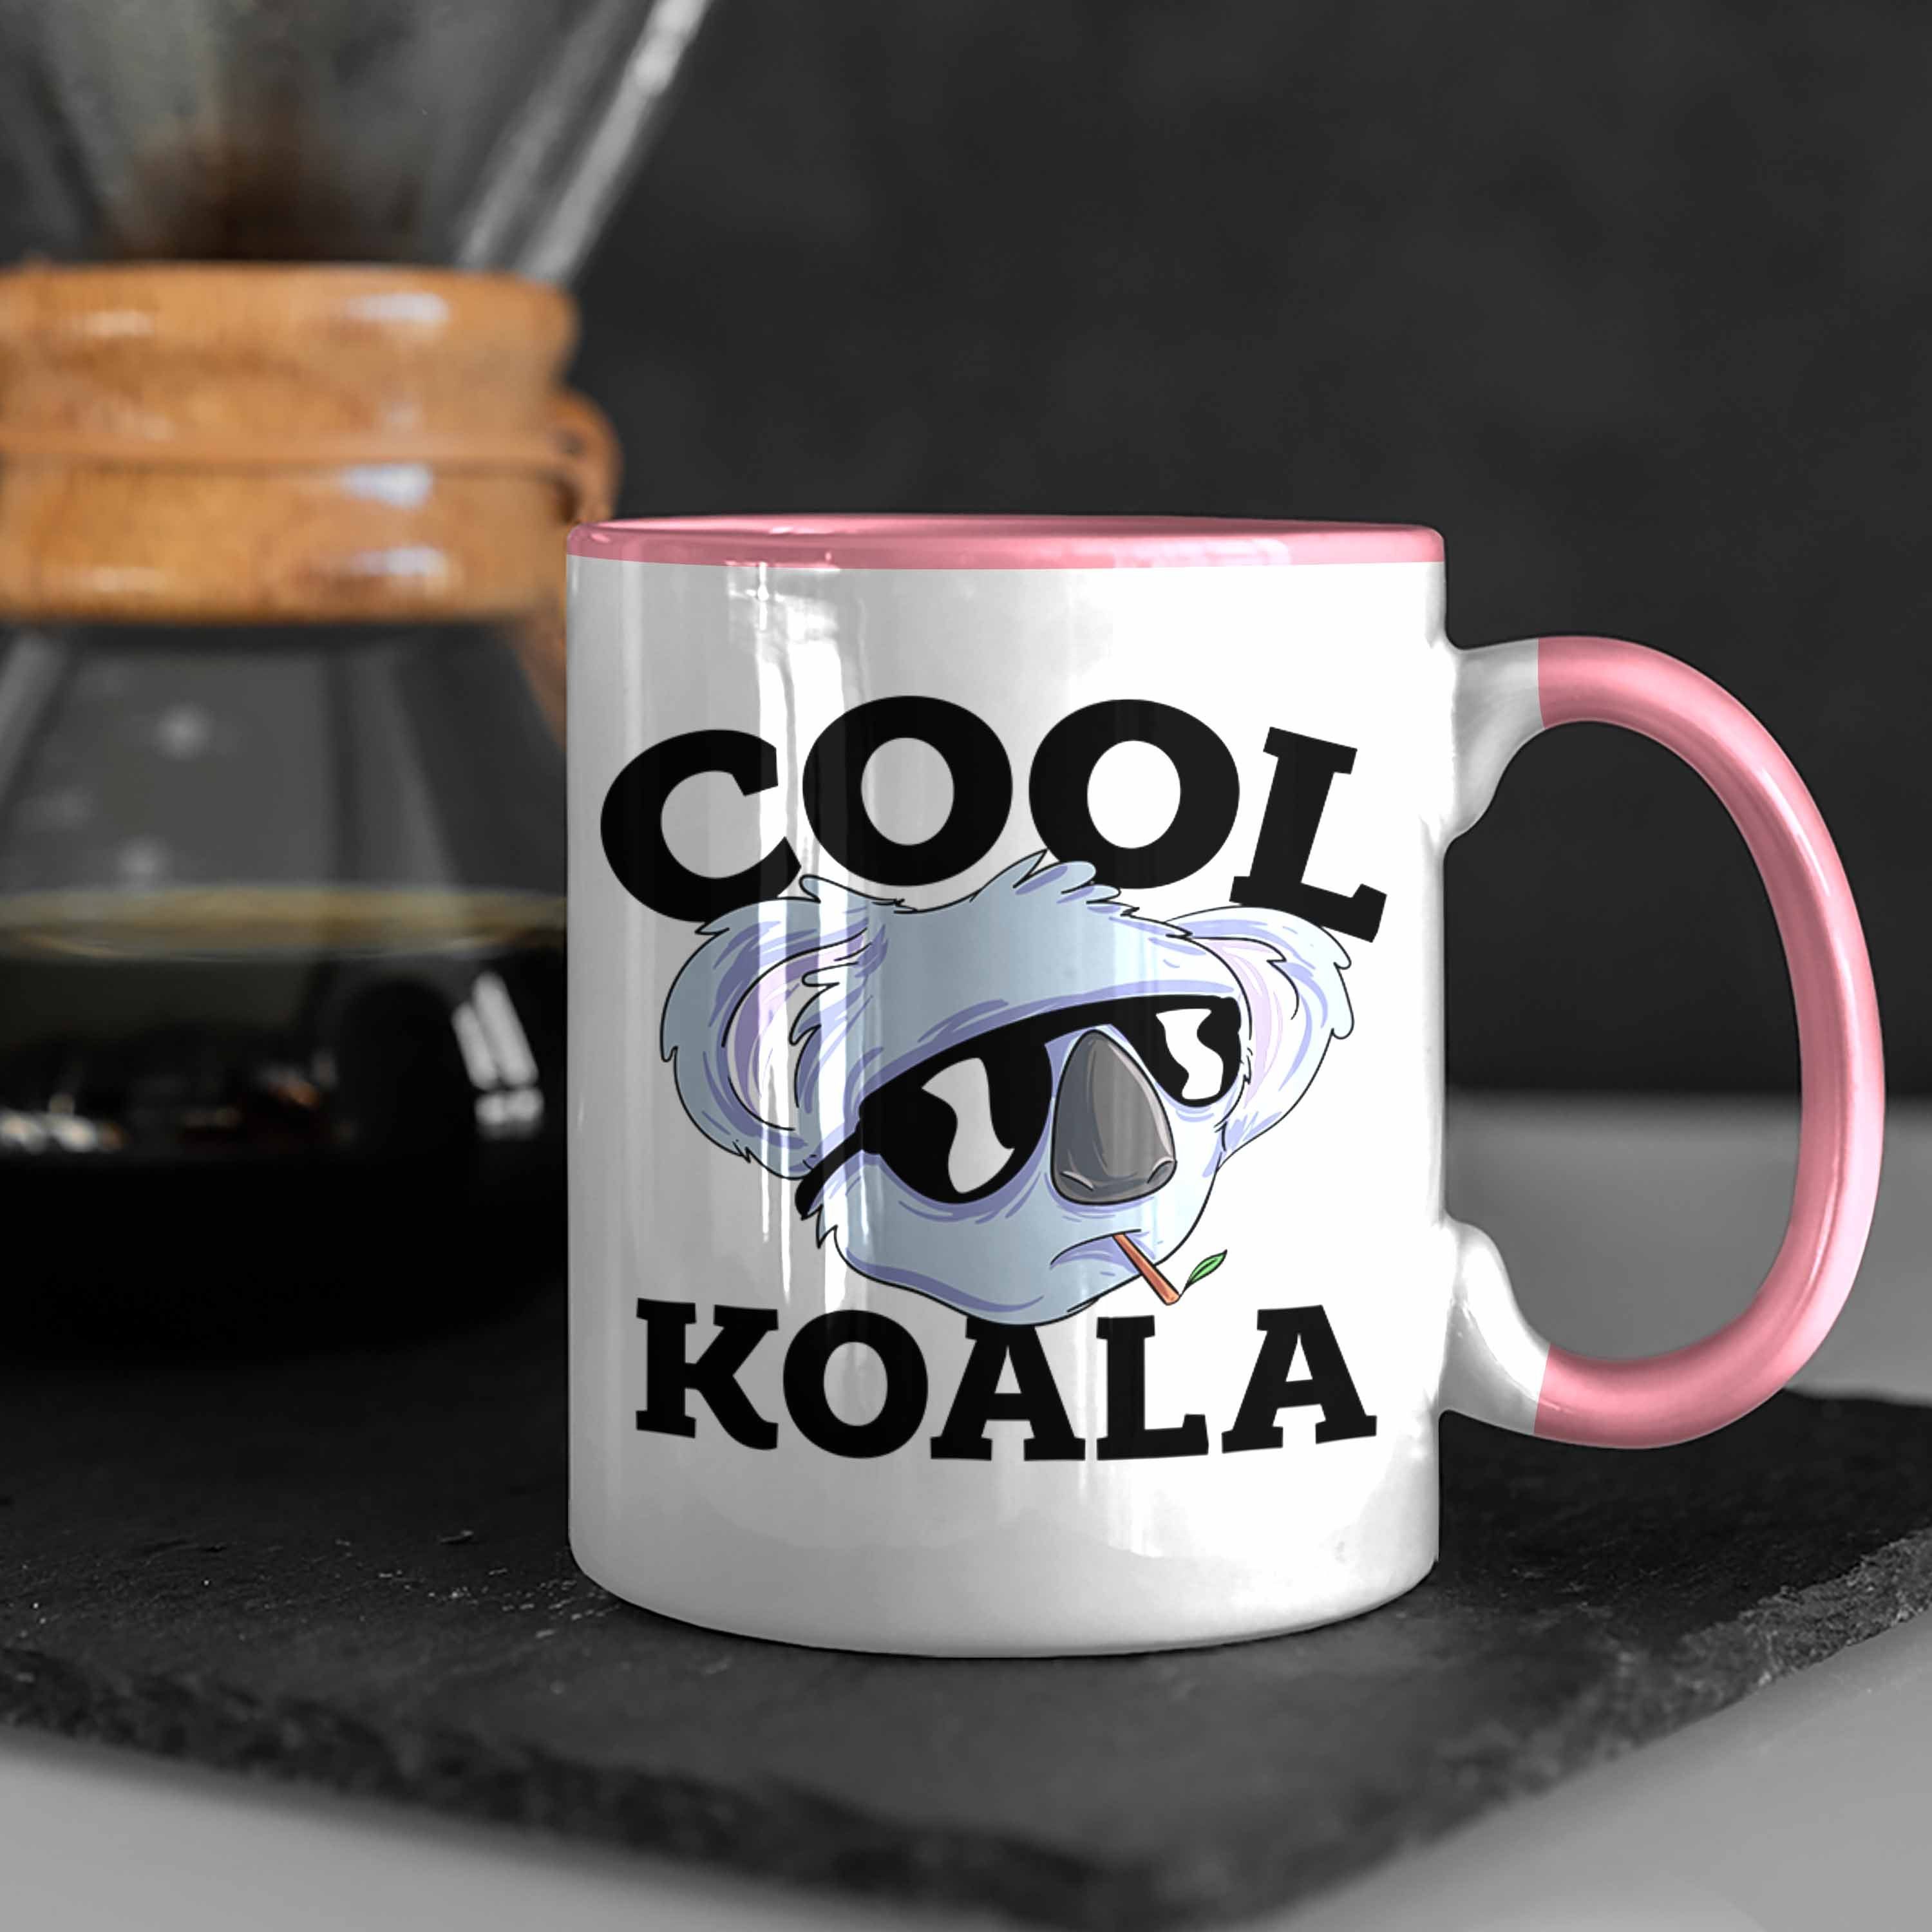 Koala-Liebhaber Rosa Trendation für Koala Geschenkidee Tasse Tasse Tasse Koala-Aufdruck